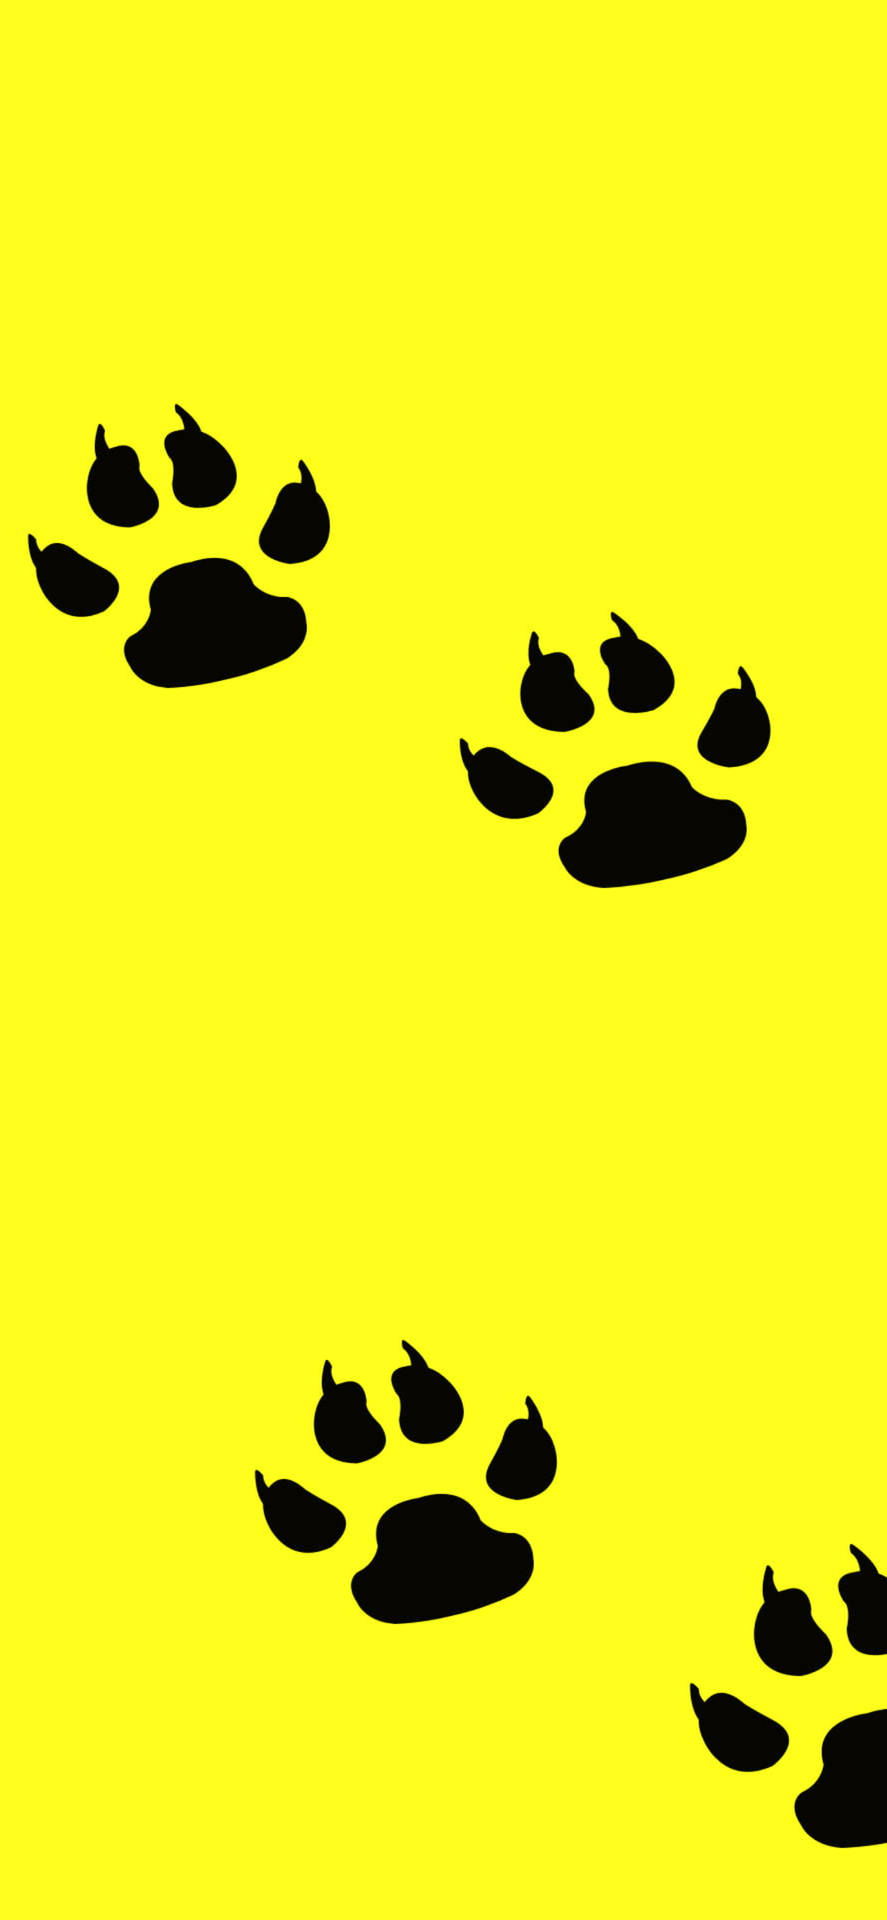 Black Paw Prints On Yellow Background